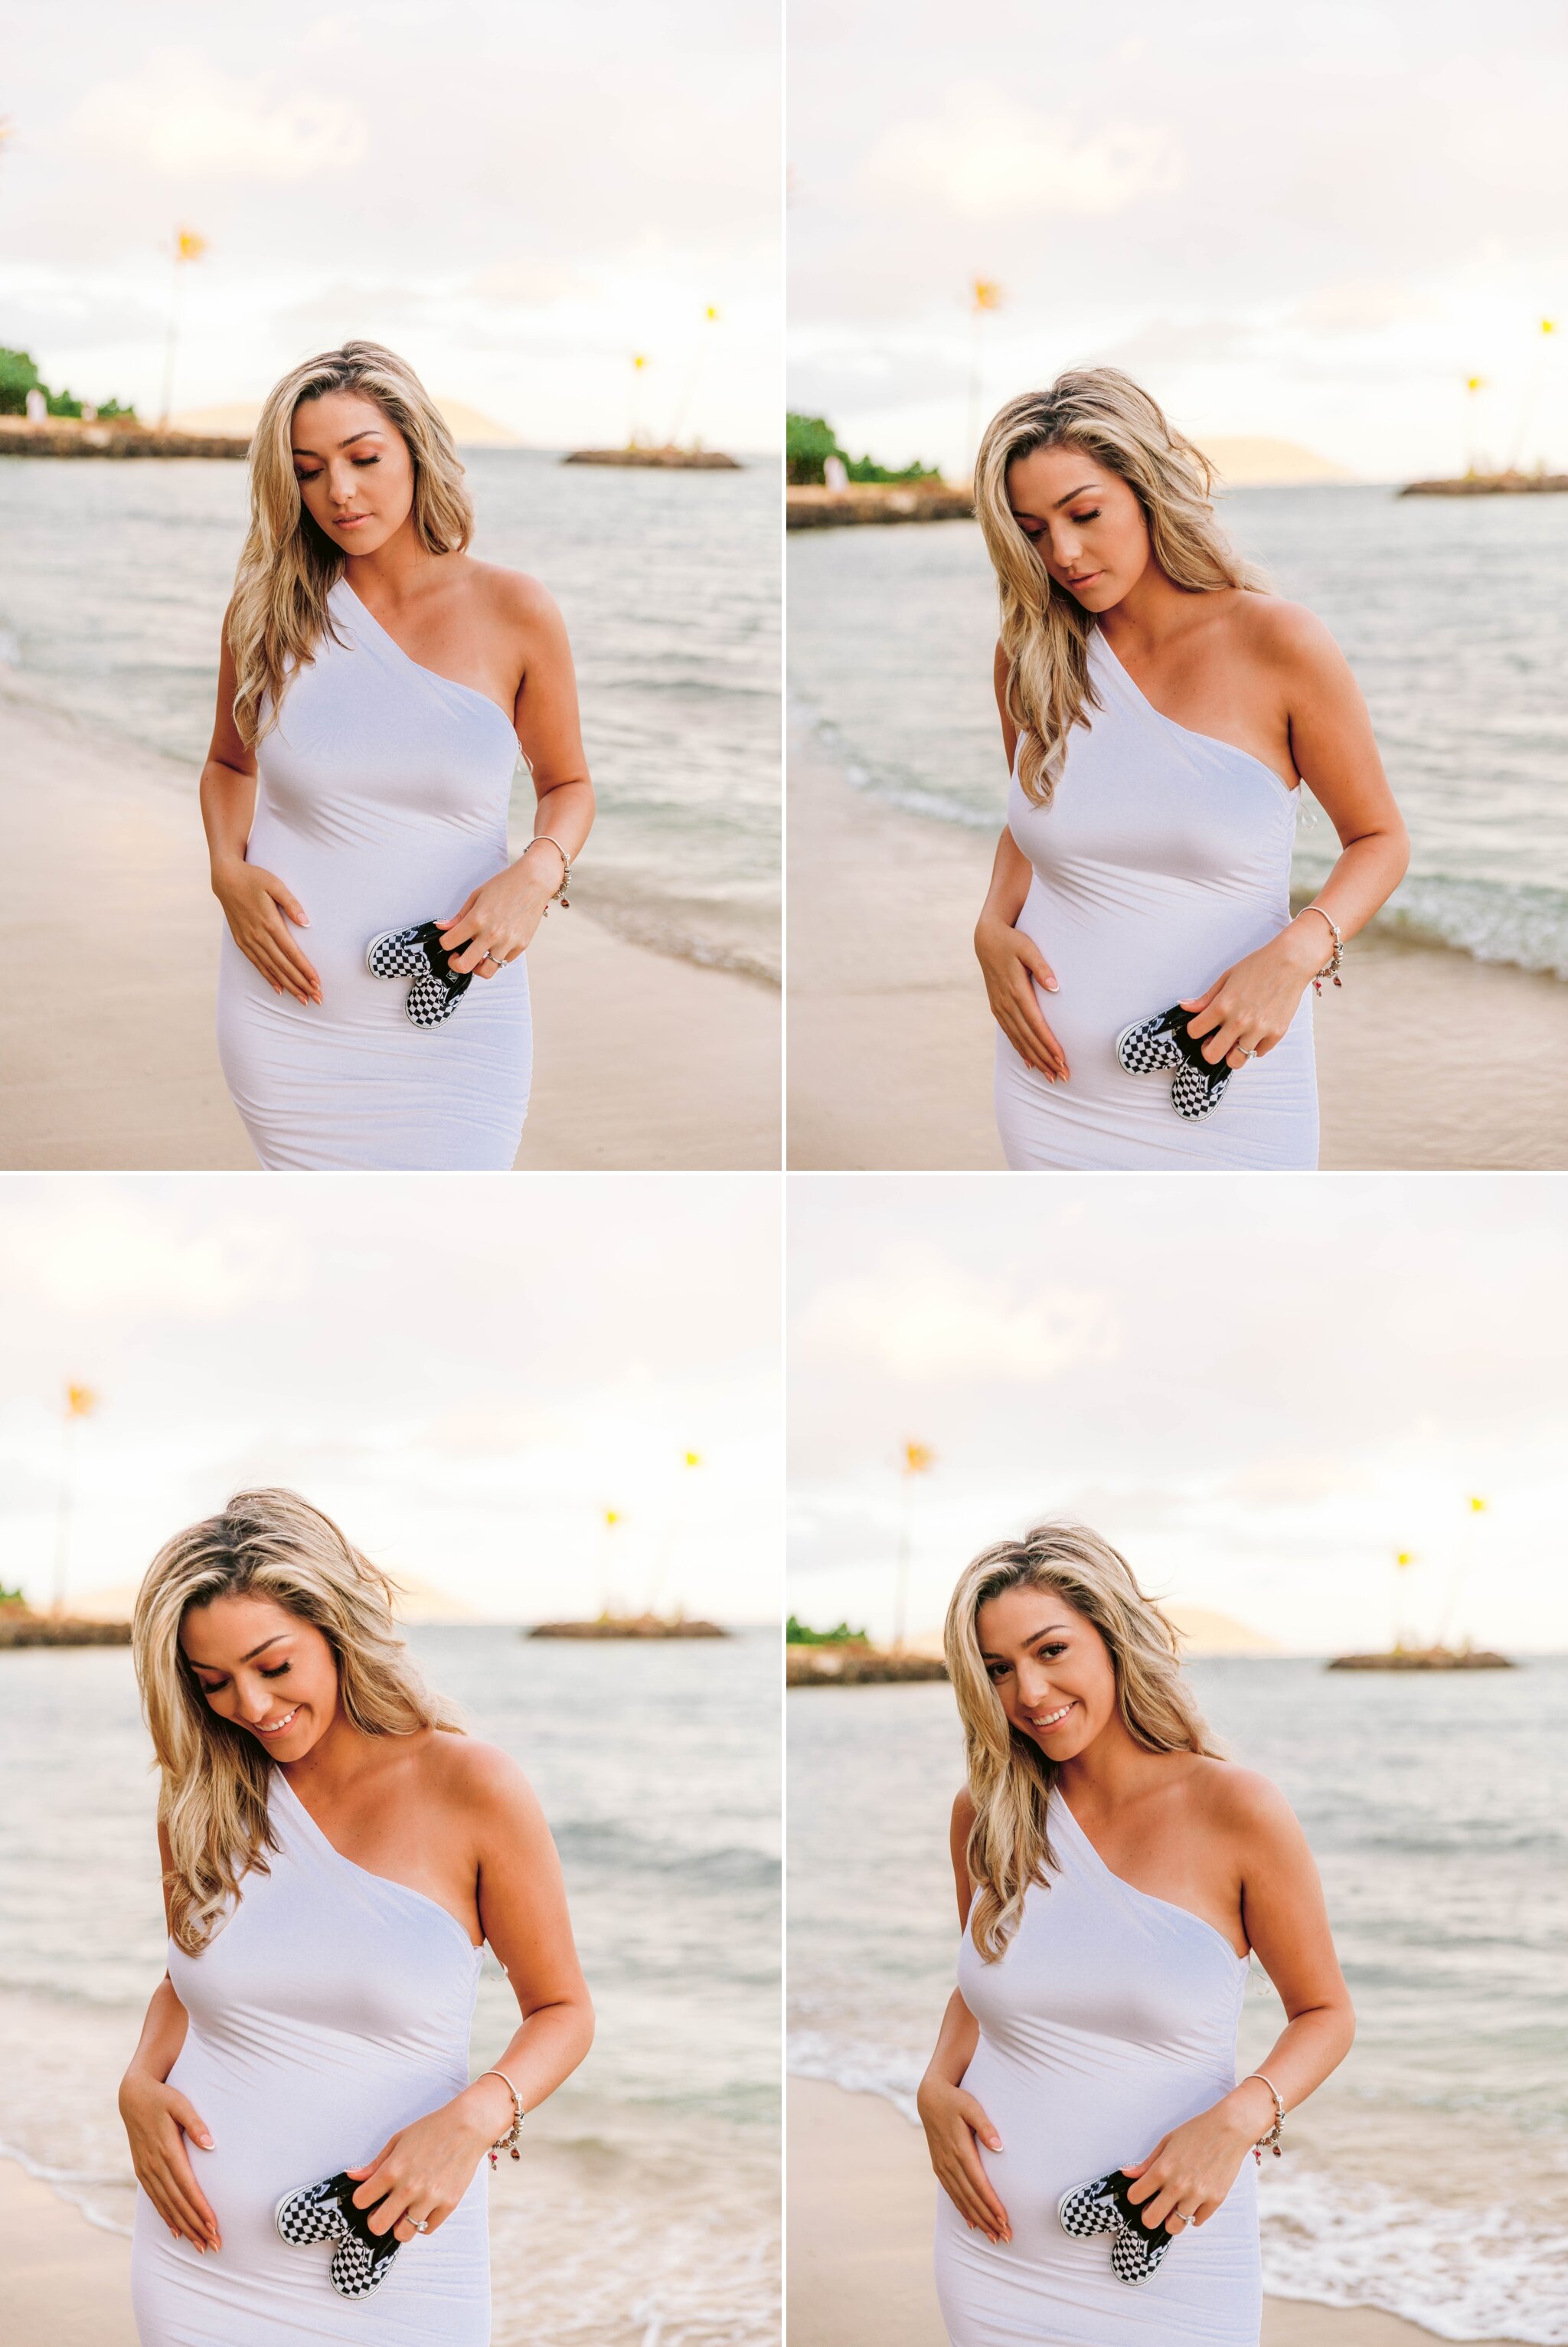 Baby Announcement at Waialae Beach Park - Oahu Maternity Photographer